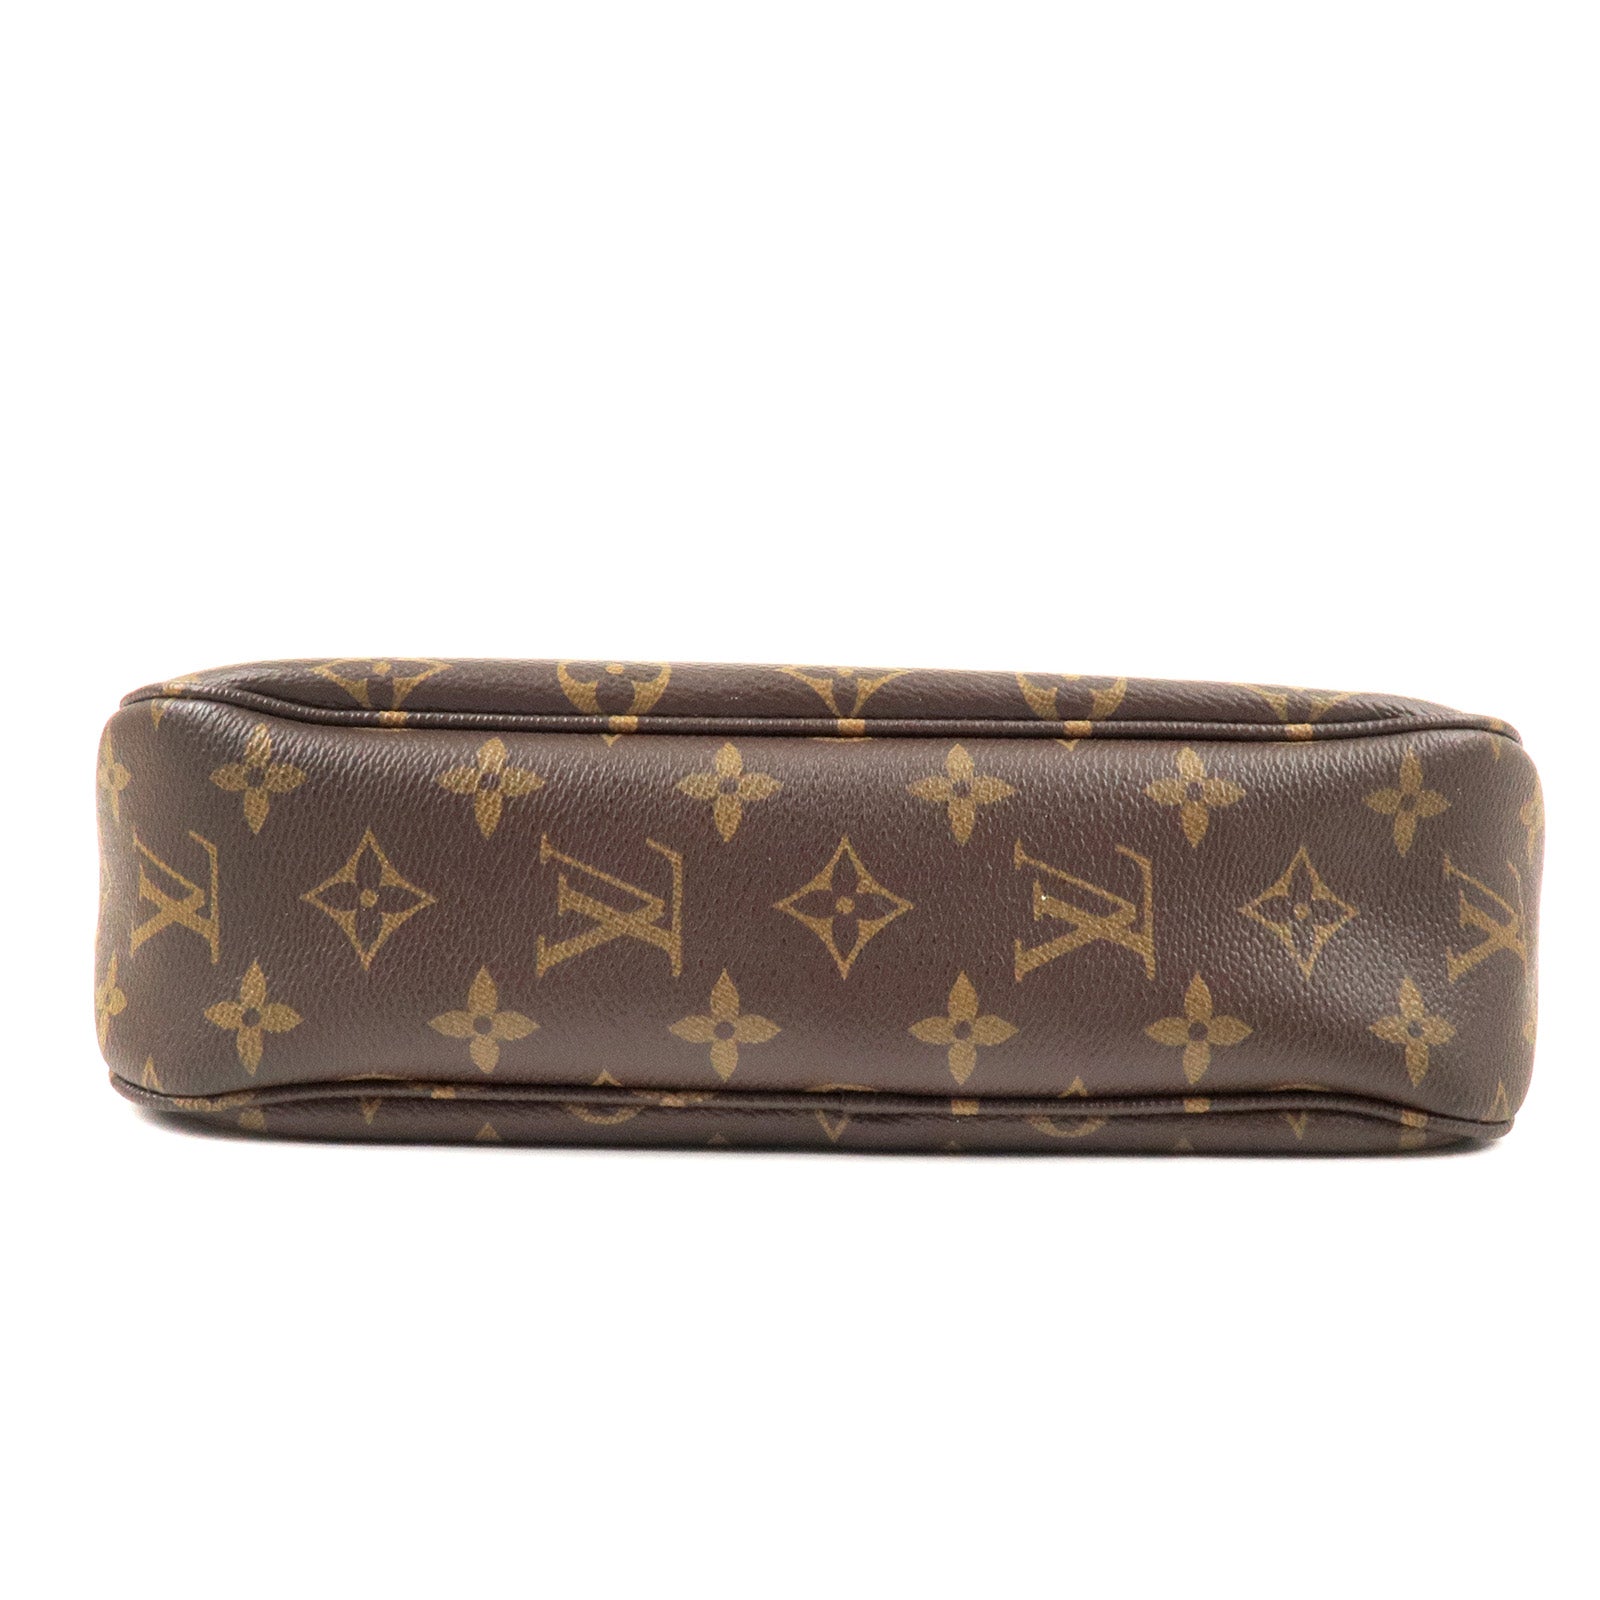 Louis-Vuitton-Monogram-Mabillon-Crossbody-Shoulder-Bag-M41679